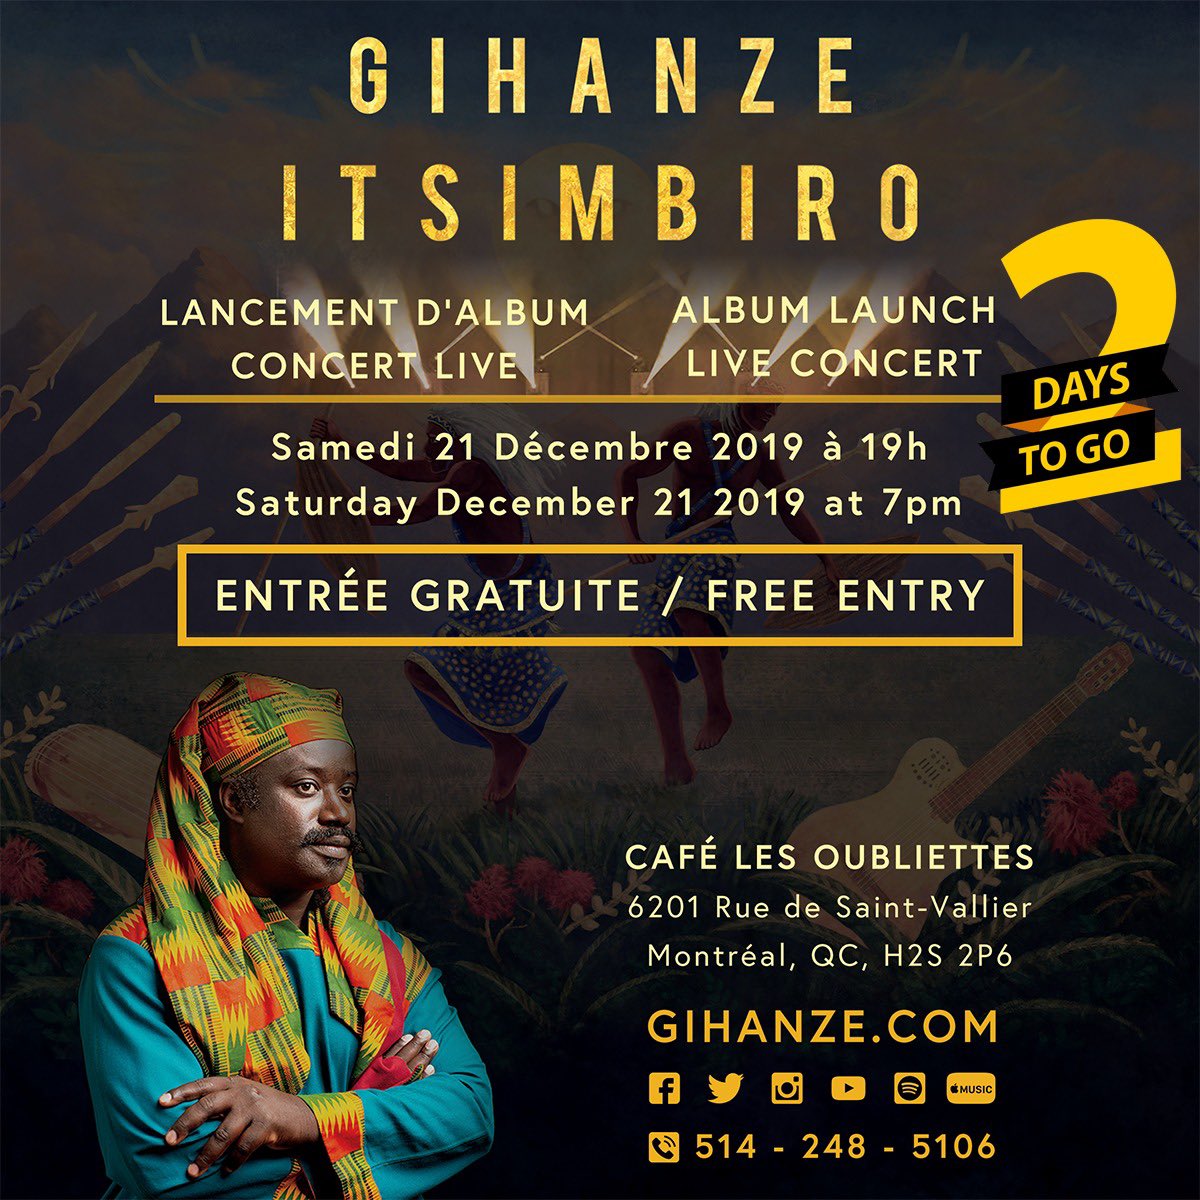 Lancement d’album “ITSIMBIRO” de GIHANZE Concert live GIHANZE “ITSIMBIRO” album launch live show. 21-12-2019 facebook.com/events/2461620… #gihanze #blues #africanblues #worldmusic #africanmusic #traditionalmusic #rwandamusic #montrealmusic